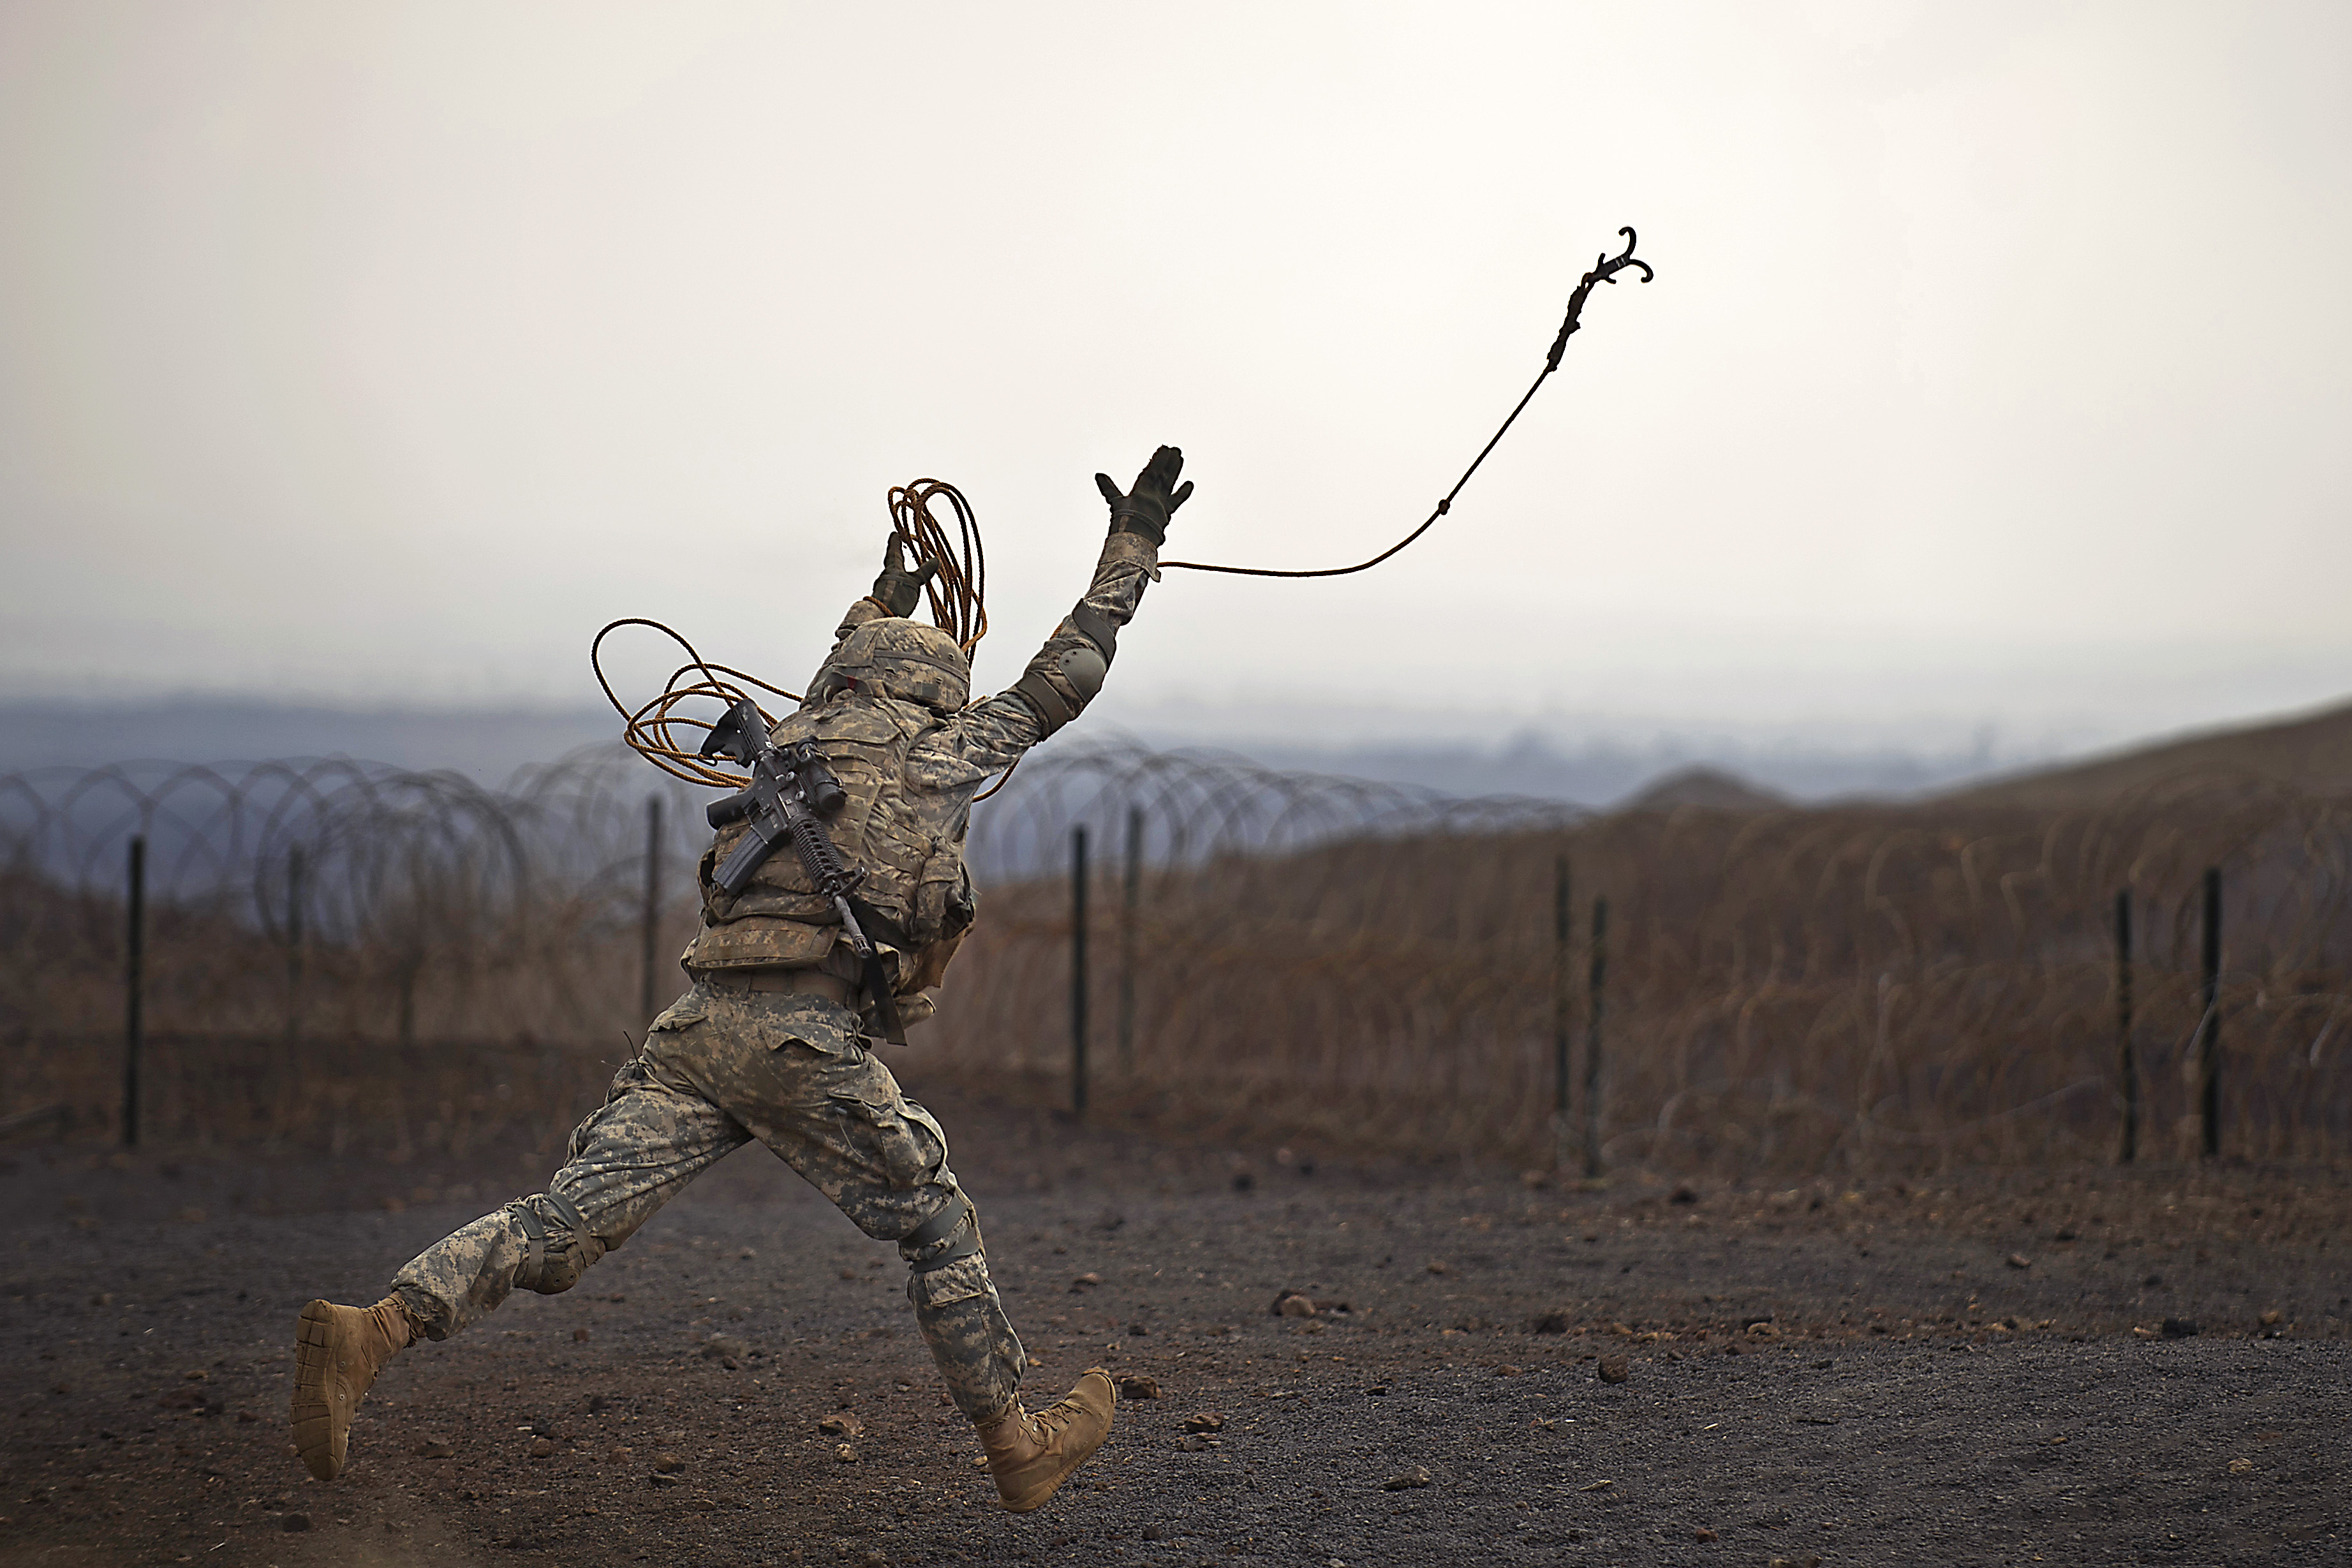 Grappling Hook Launcher  A Military Photos & Video Website